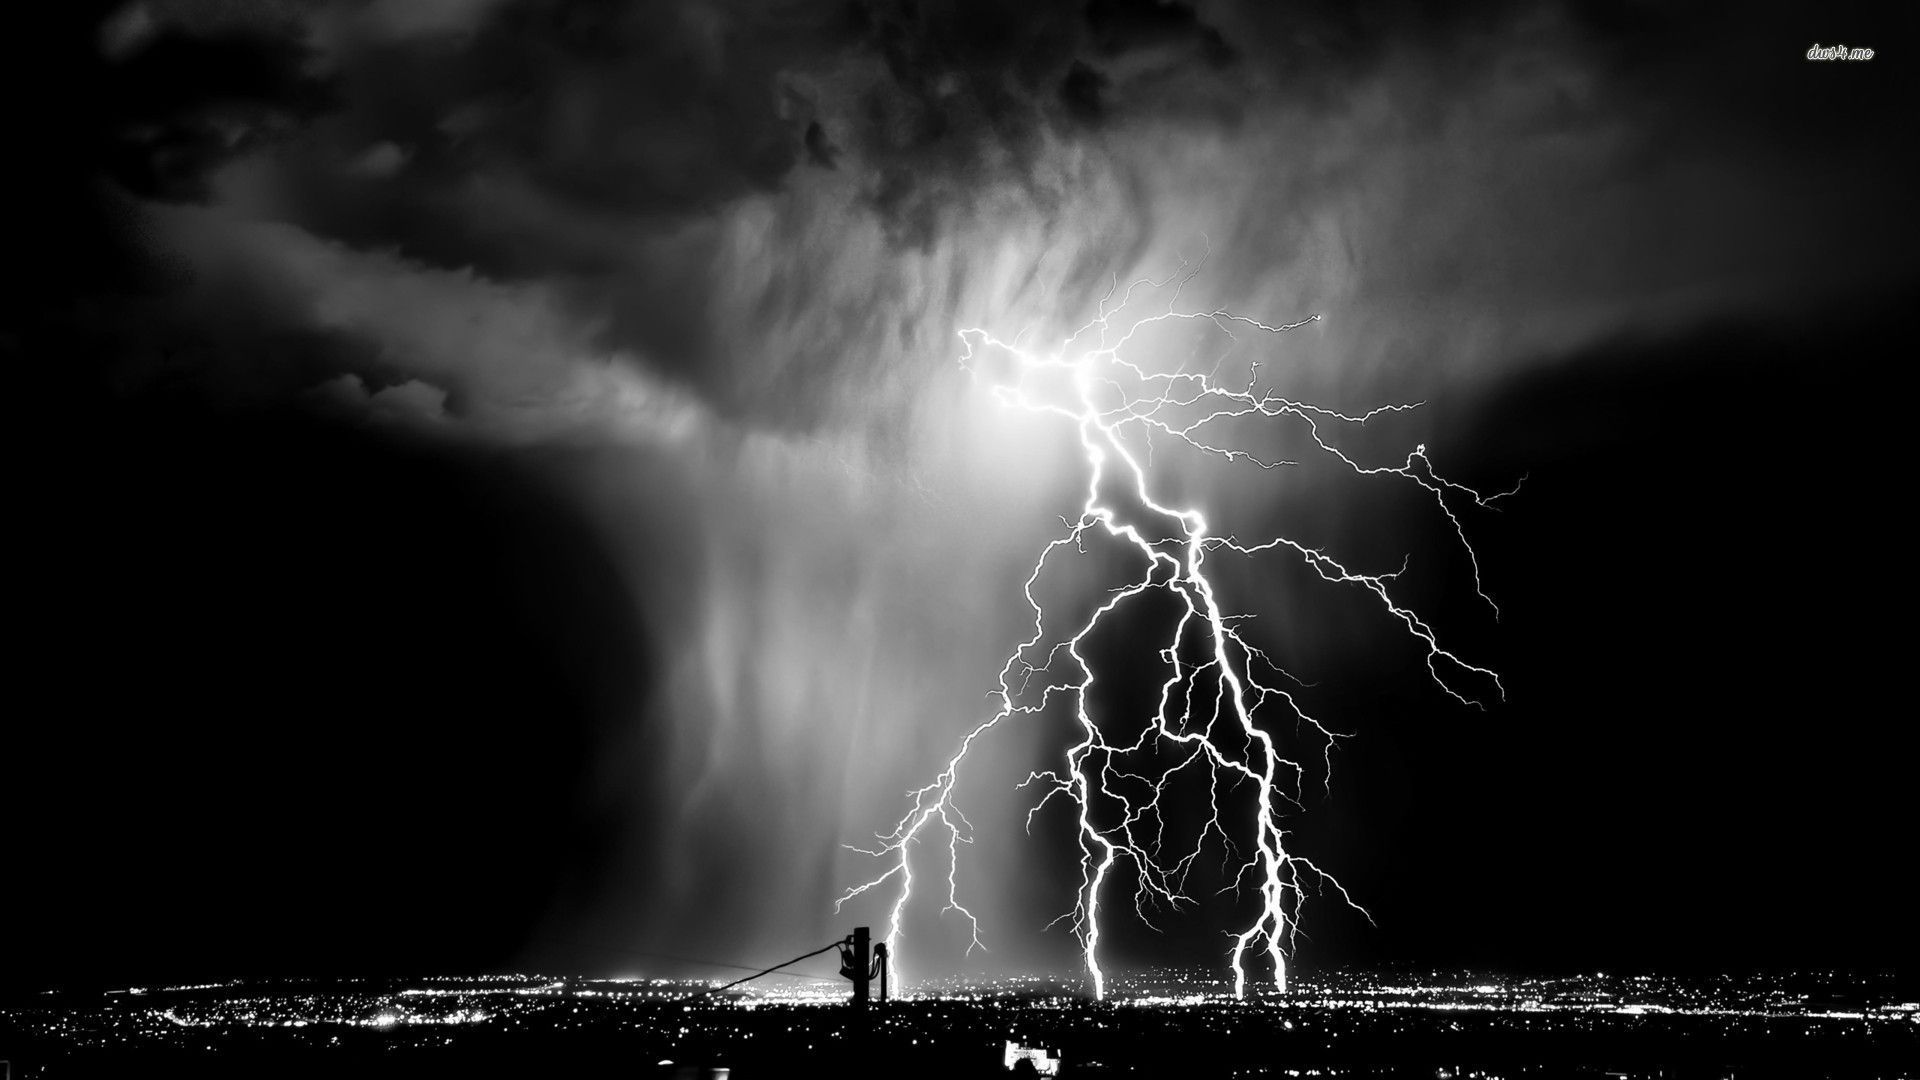 Lightning striking the city HD wallpaper. Lightning image, City